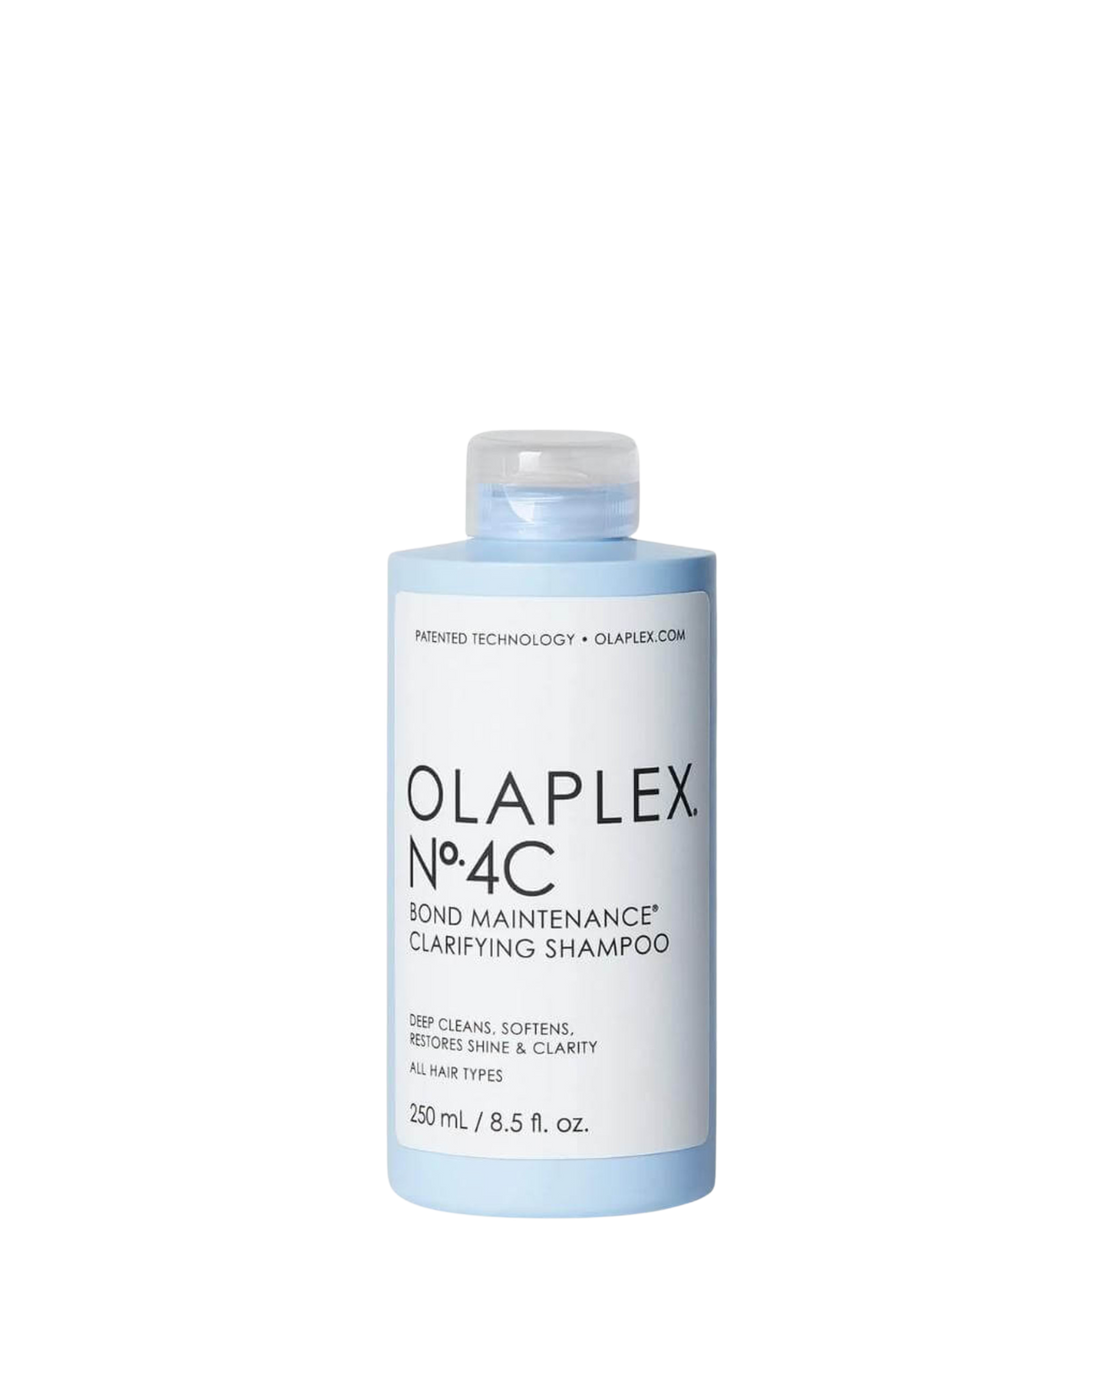 OLAPLEX N°4C SHAMPOING CLARIFIANT - 250ML